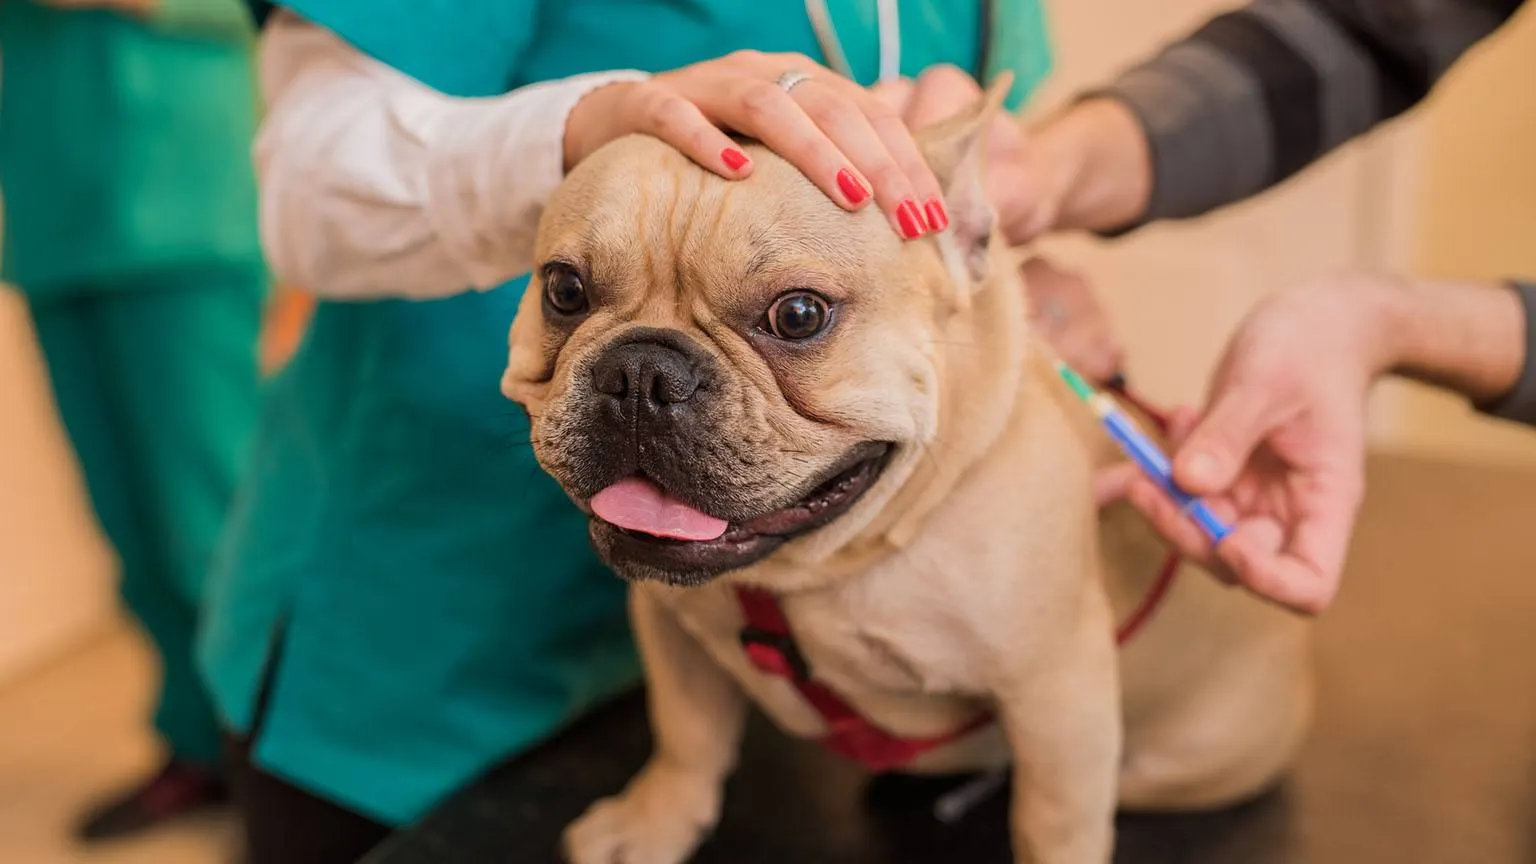 vaccinating lyme vaccines veterinarian vaccinations vacunar cachorros vacunacin challenges